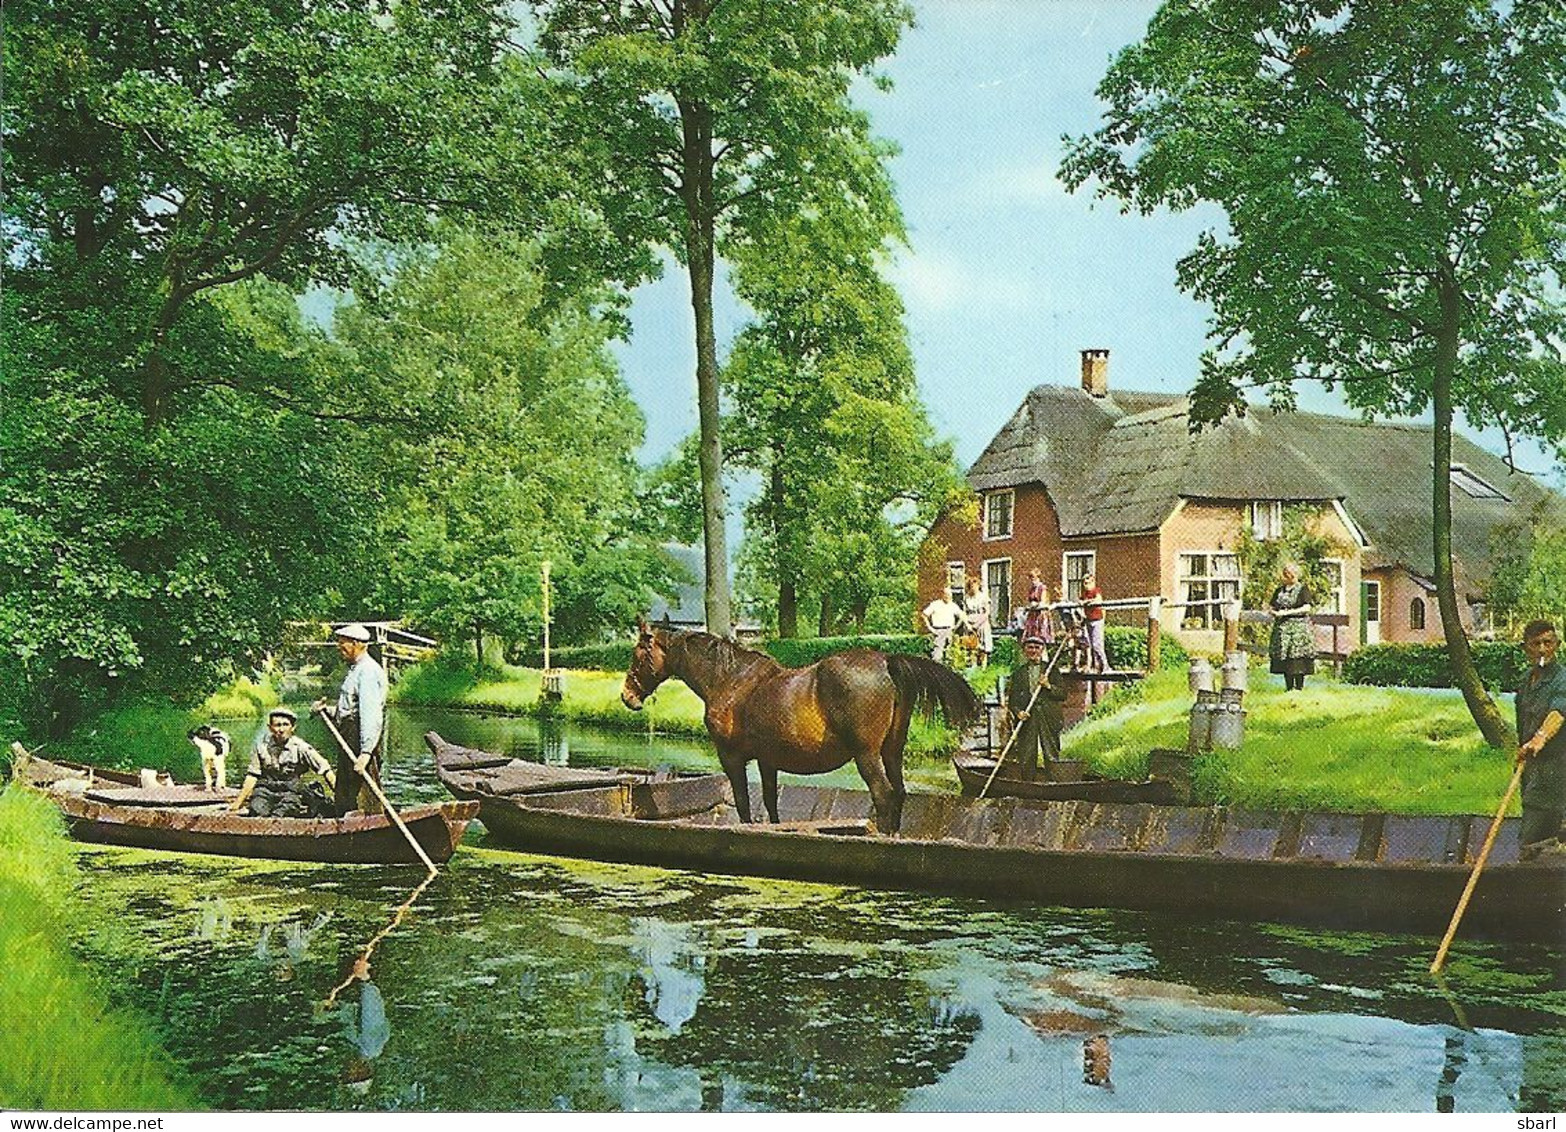 CPM Giethoorn Vervoer Paard Per Boot - Transport D'animal Sur Barque Dans Les Canaux De Hollande - Giethoorn